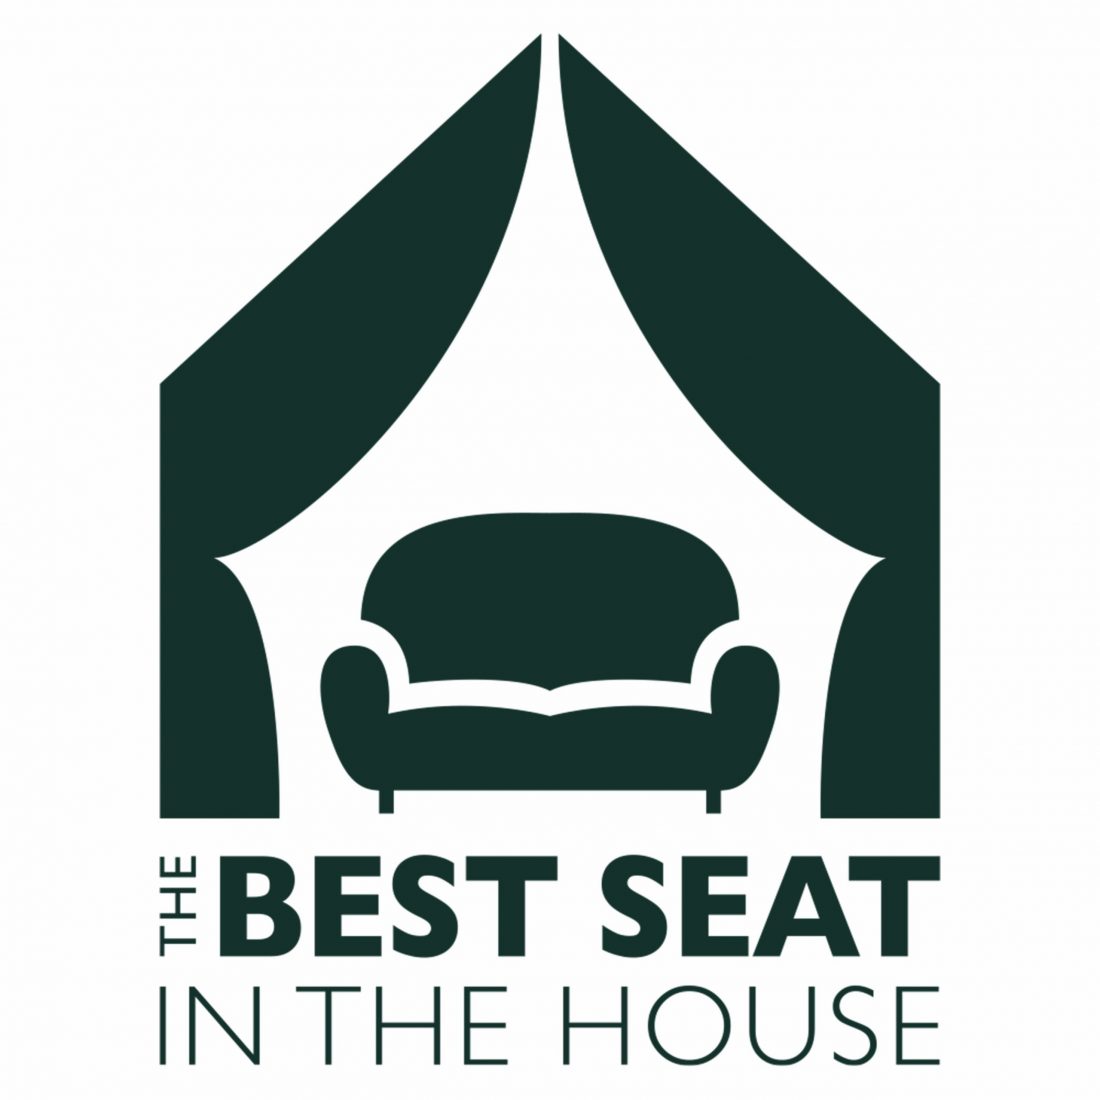 pmw-best-seat-house-logo